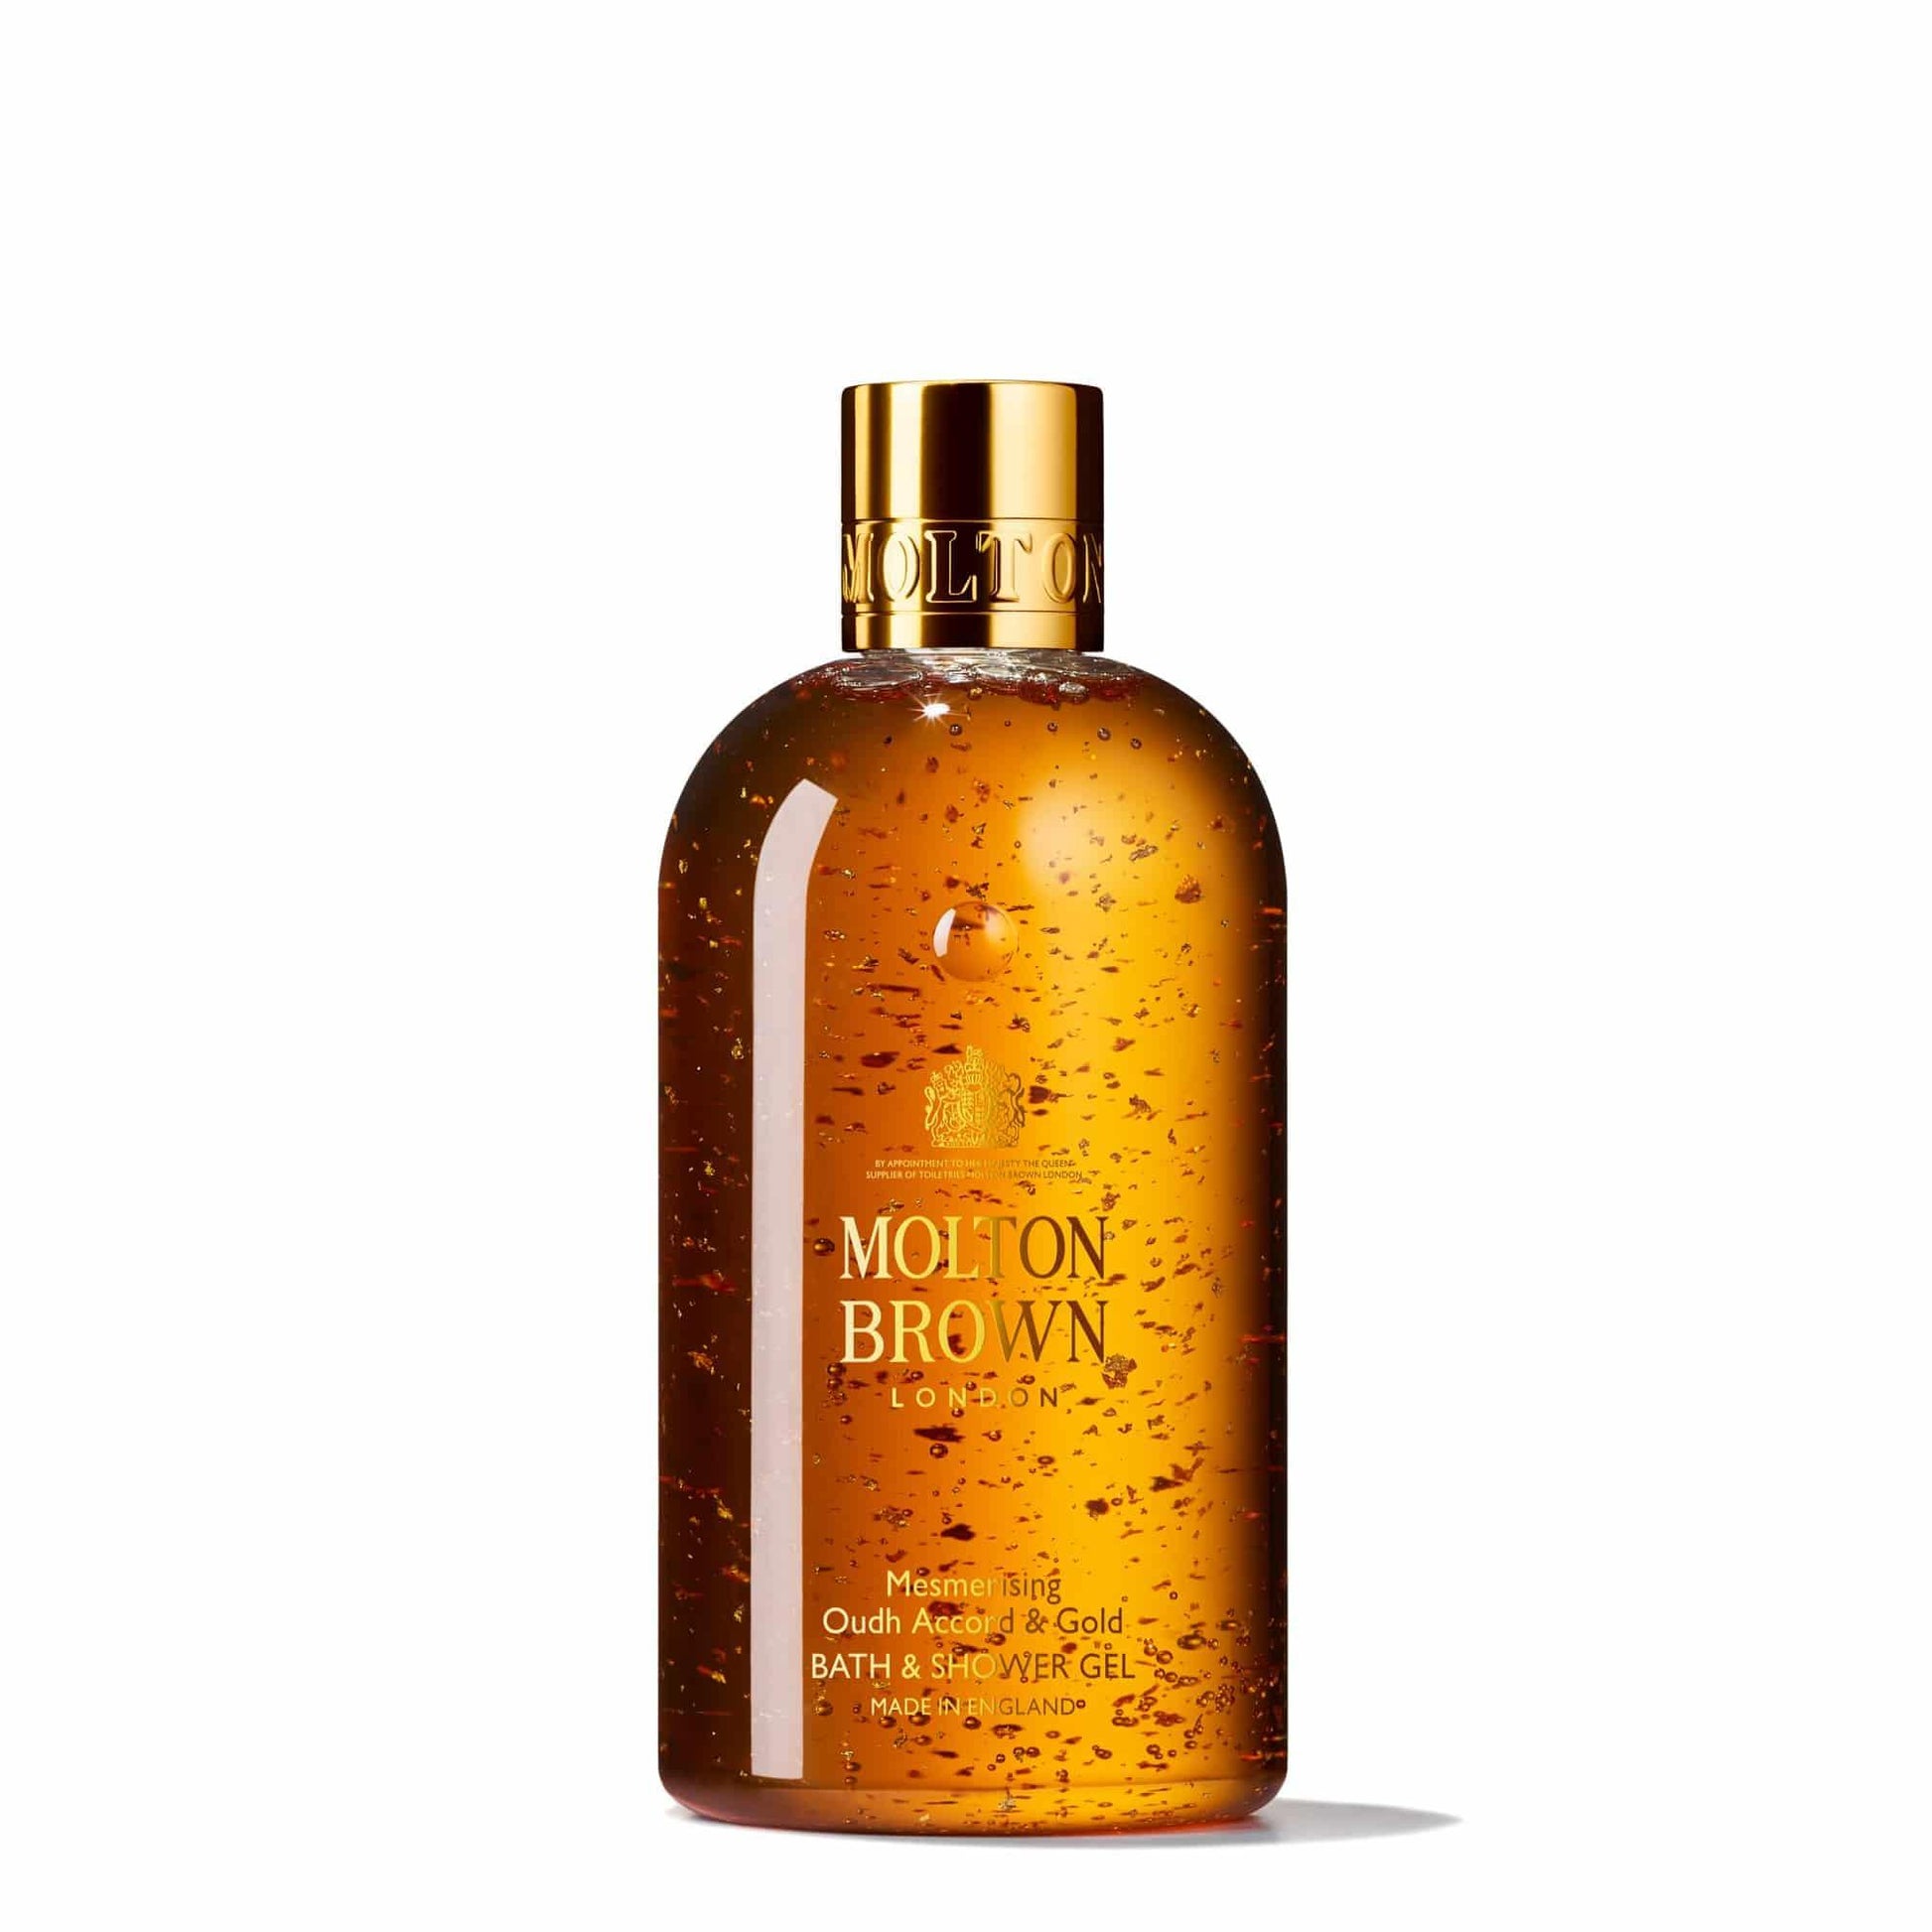 Mesmerising Oudh Accord & Gold Bath & Shower Gel - RUTHERFORD & Co